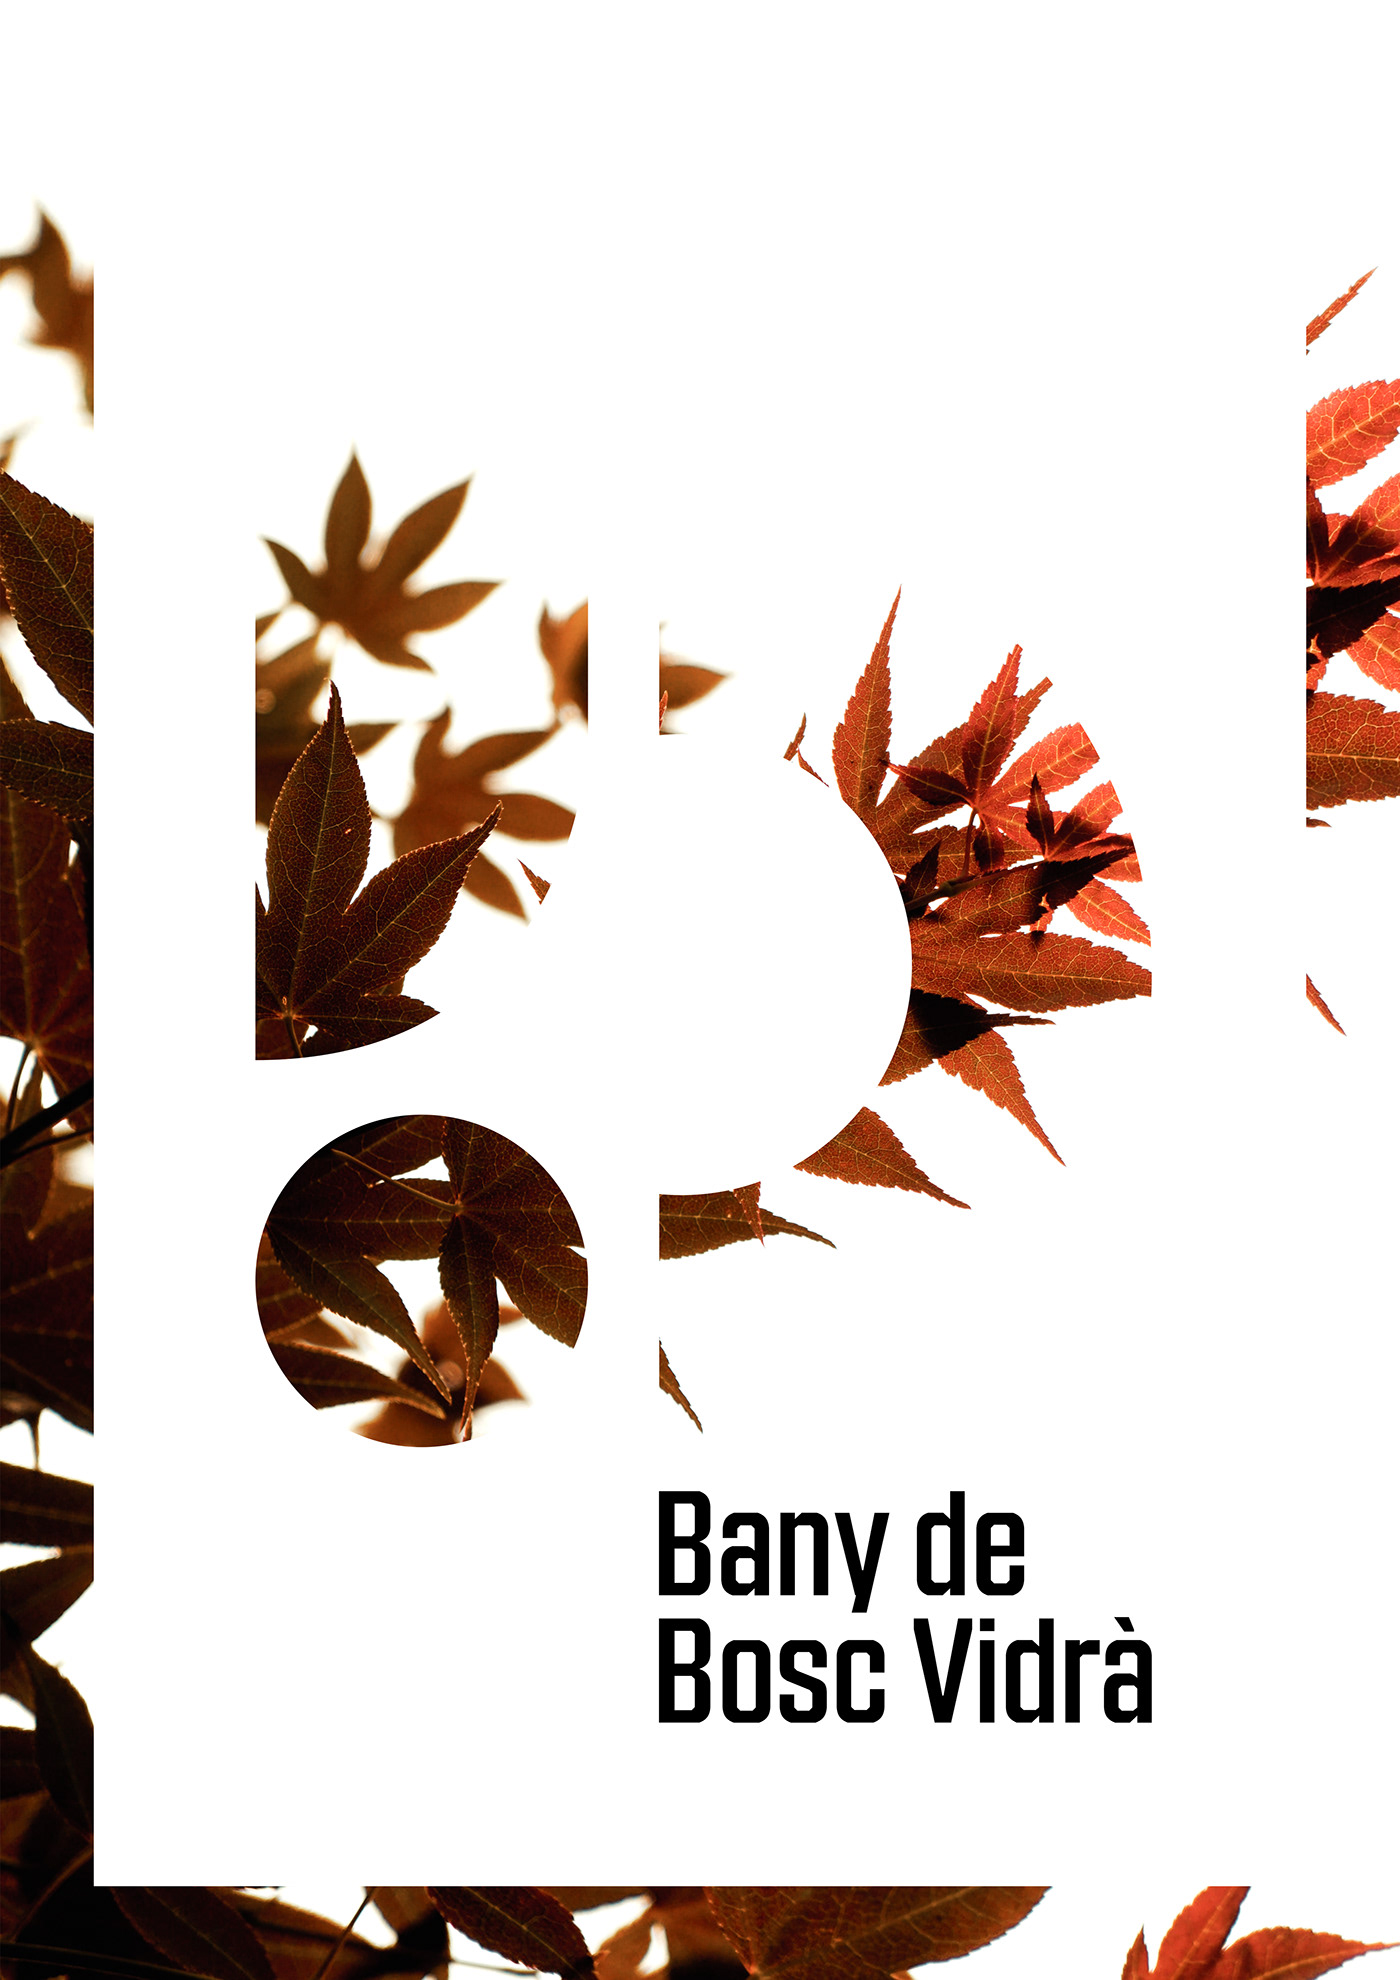 Behance brand logo brand identity graphic design  design Xavier Esclusa Trias posters Illustrator photoshop